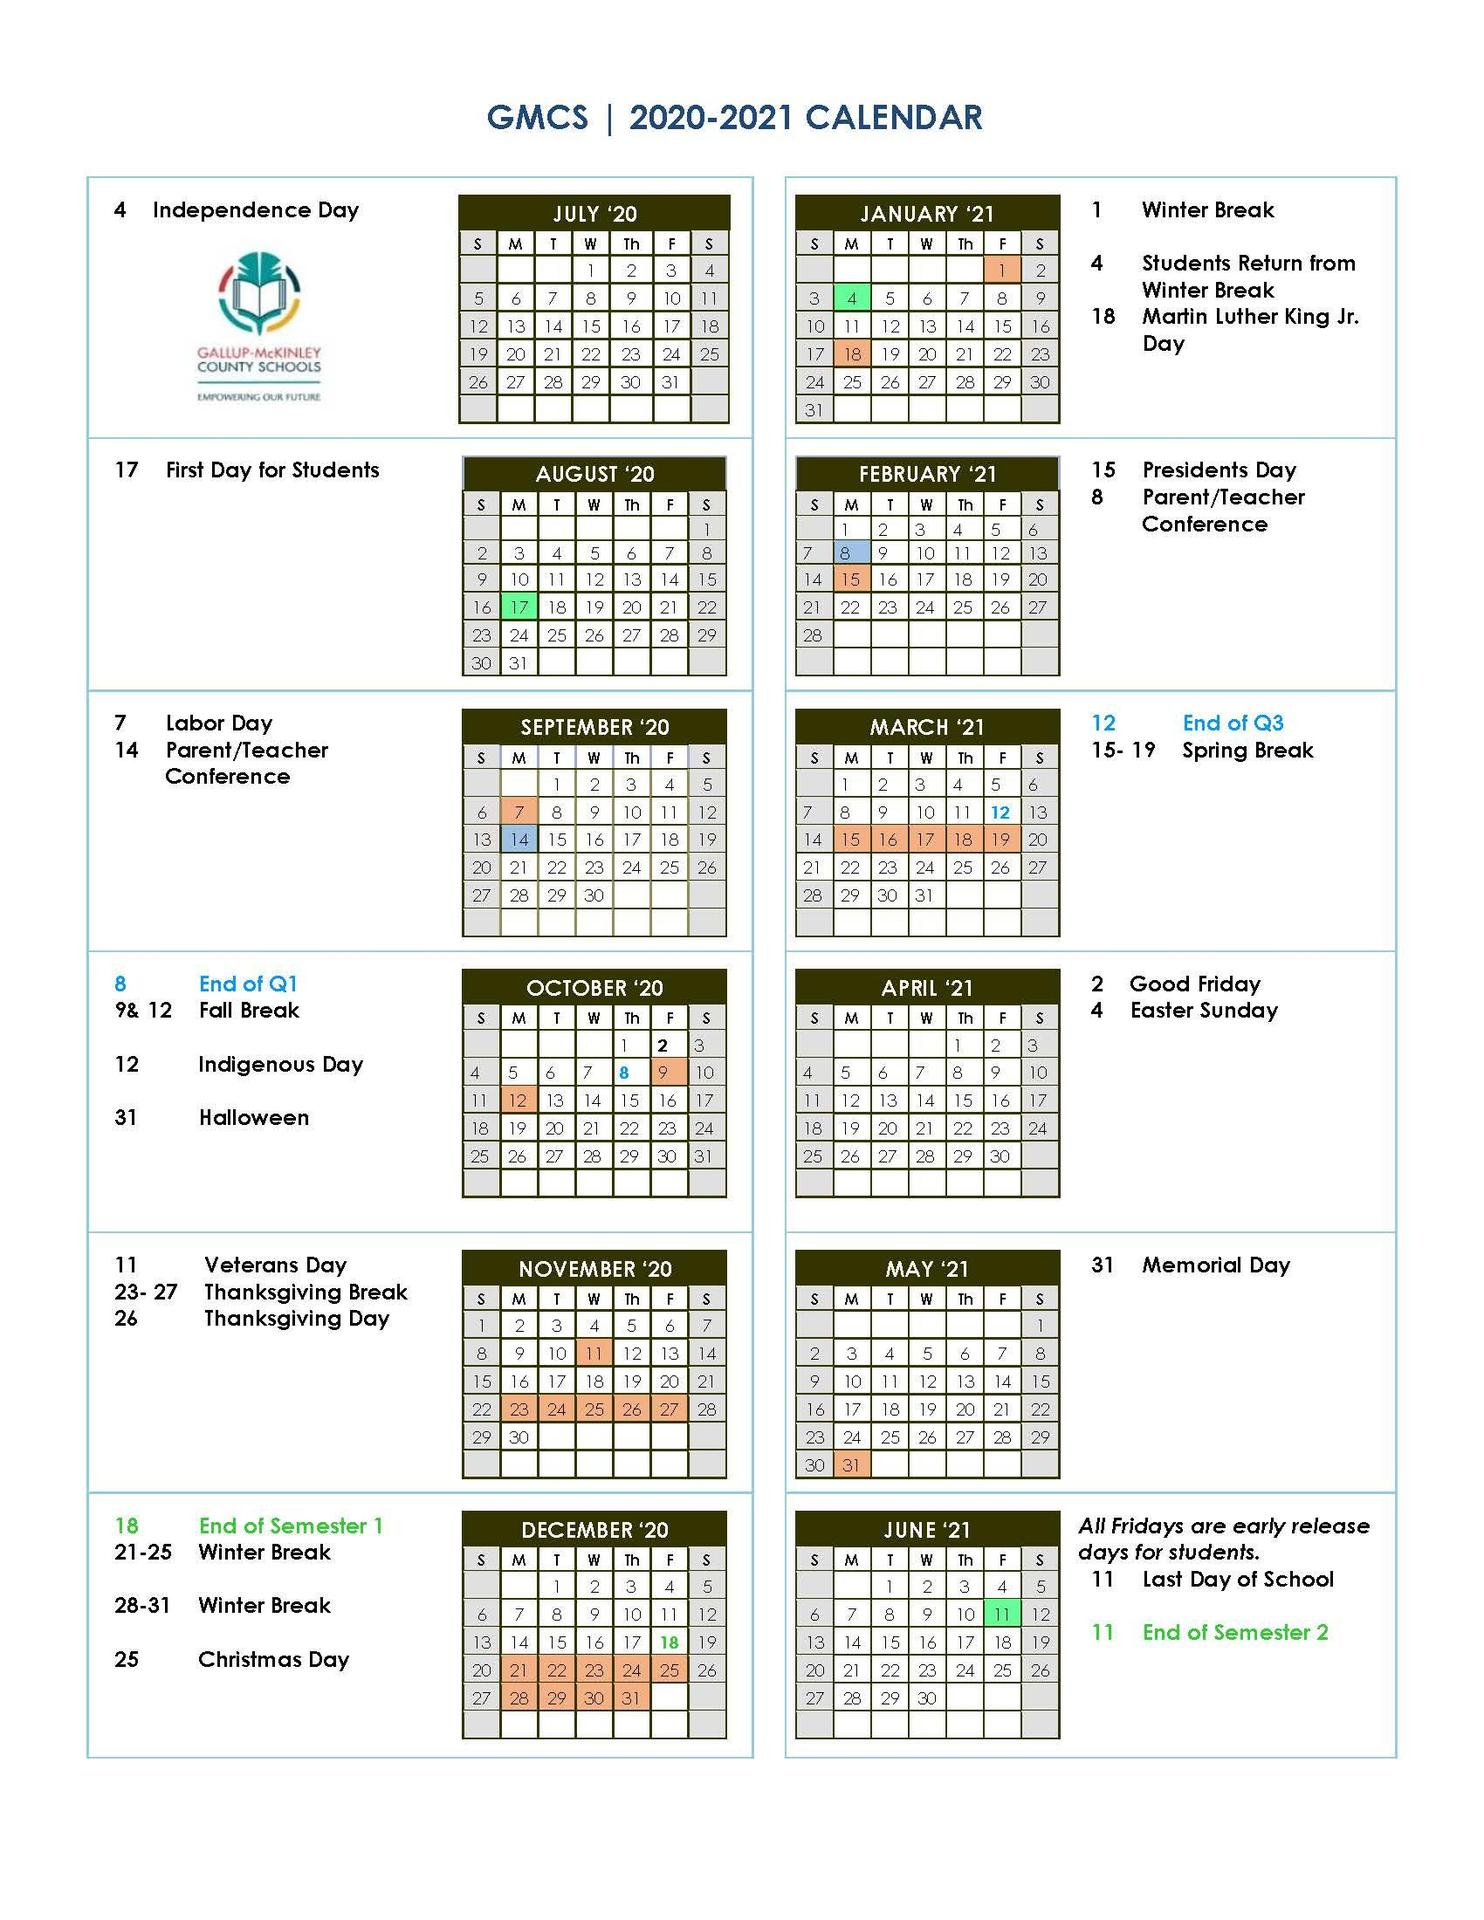 District School Year Calendar/Graduation Dates – Parents